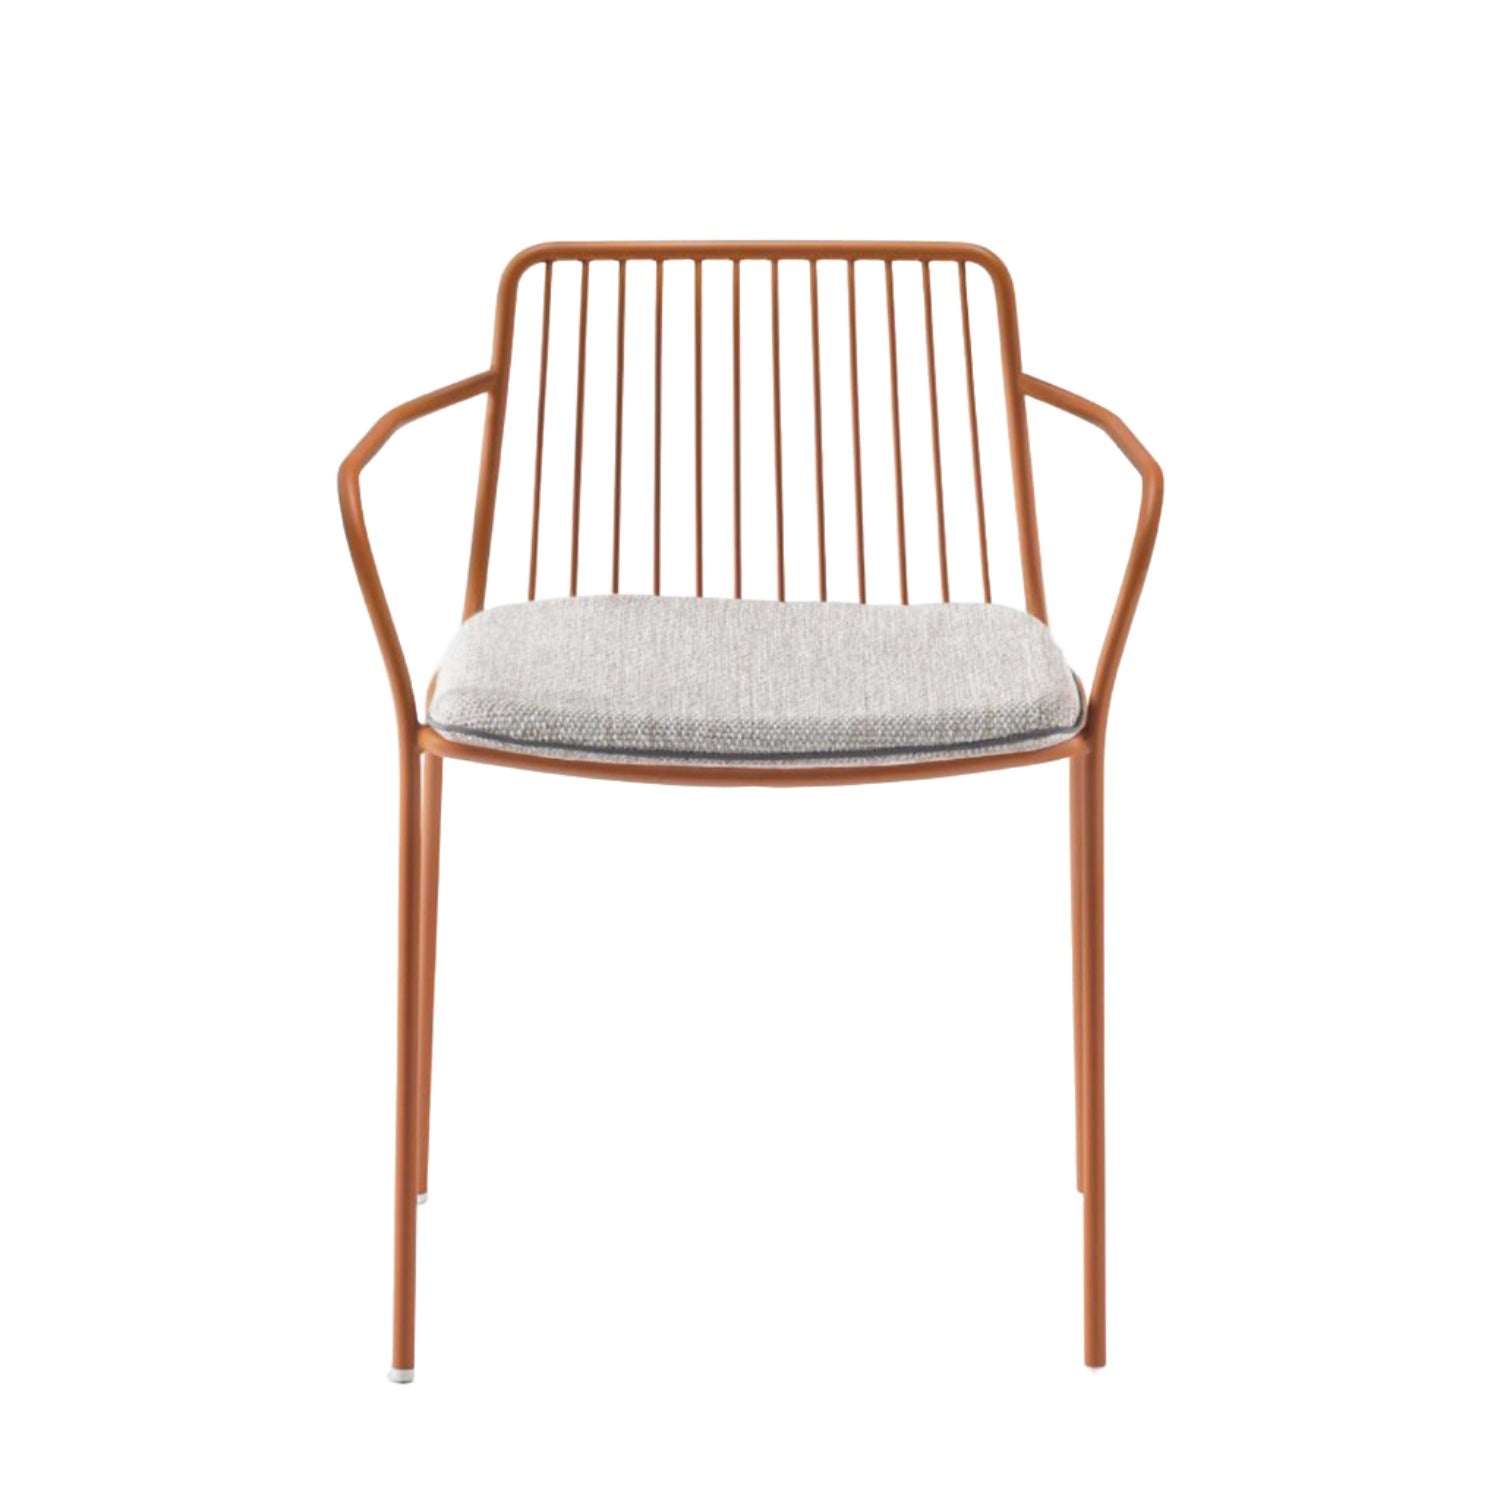 Pedrali Nolita 3650-3 seat cushion on terracotta Nolita 3656 chair